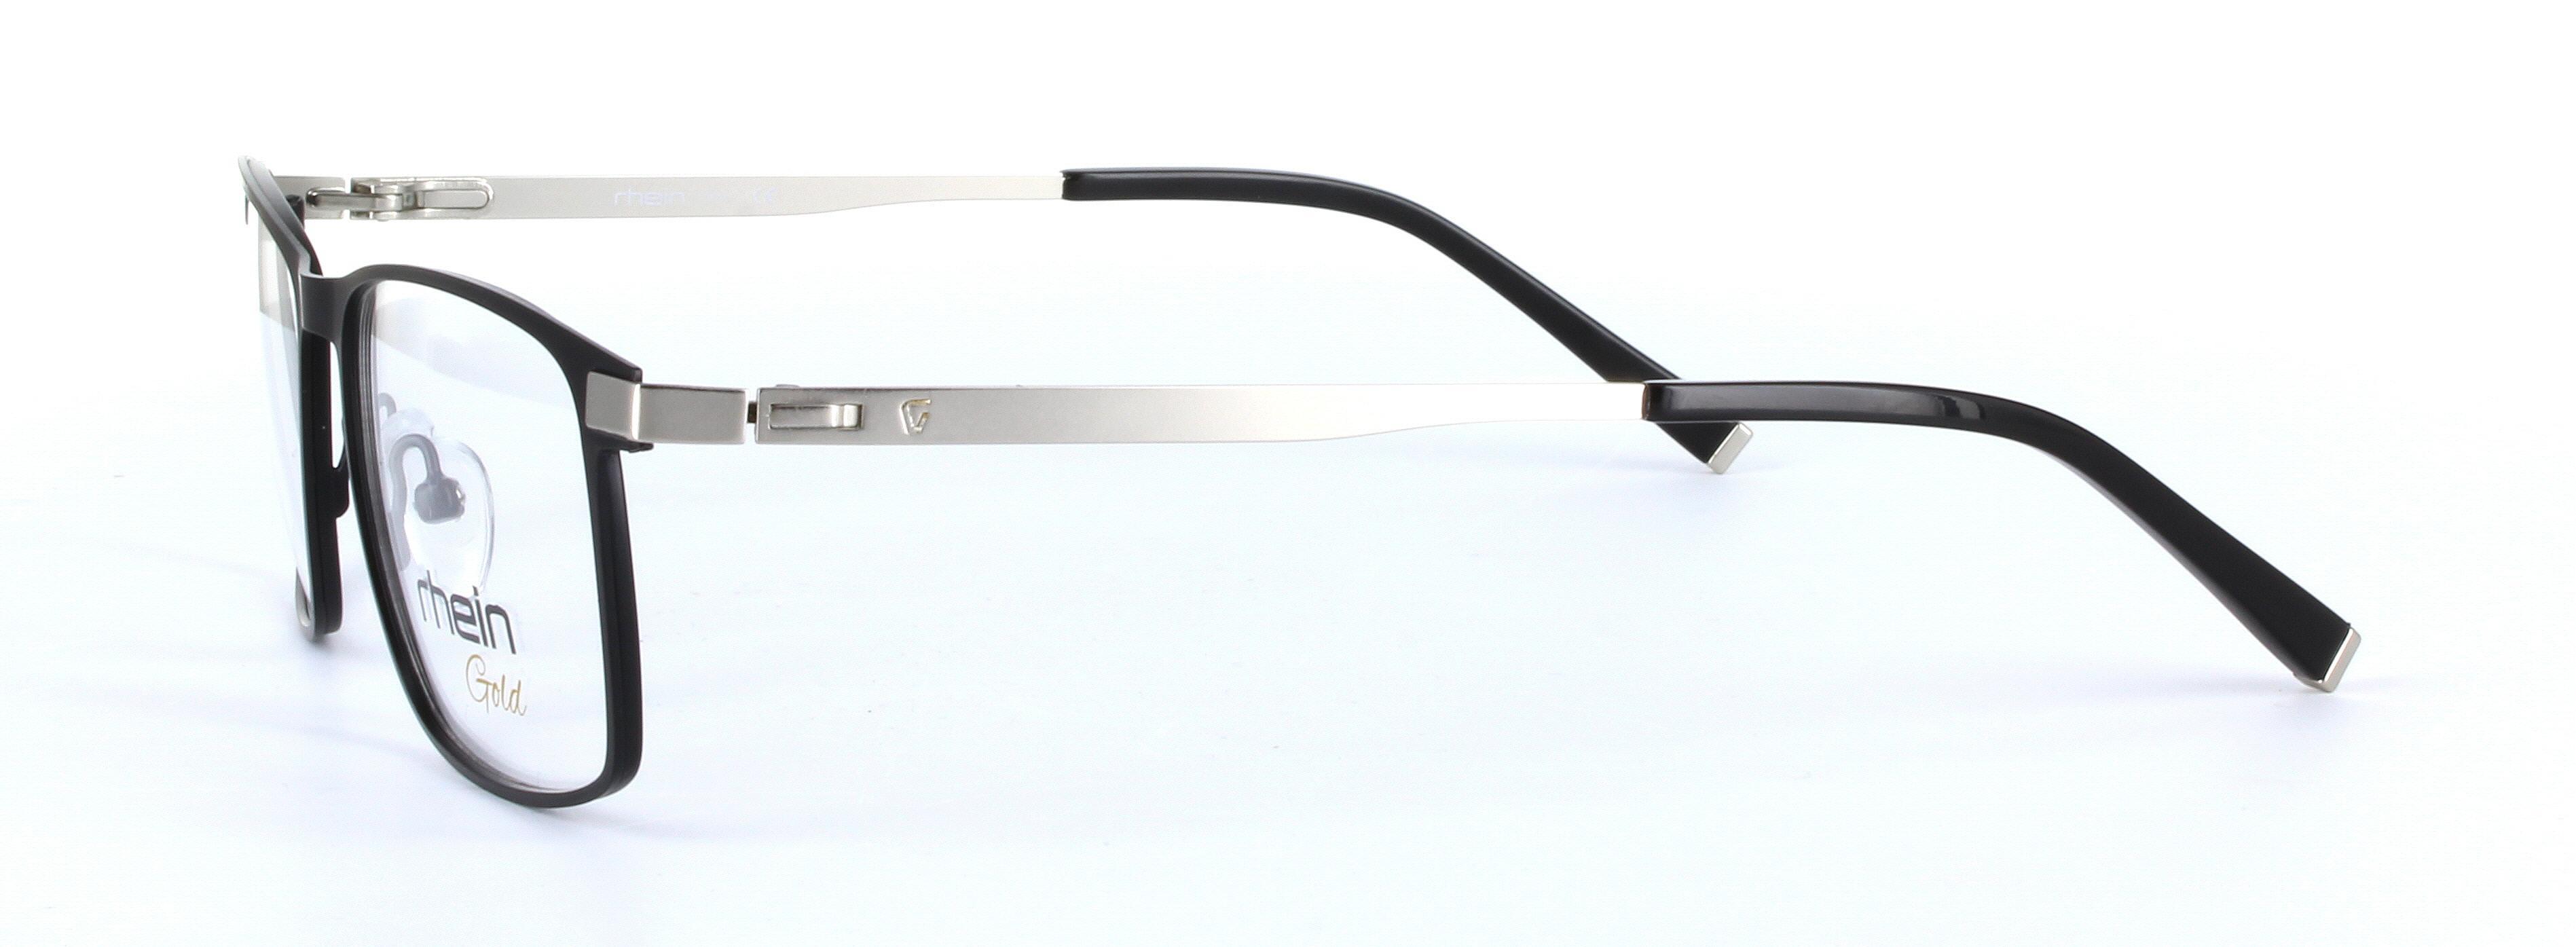 Adam Black Oval Rectangular Metal Glasses - Image View 2